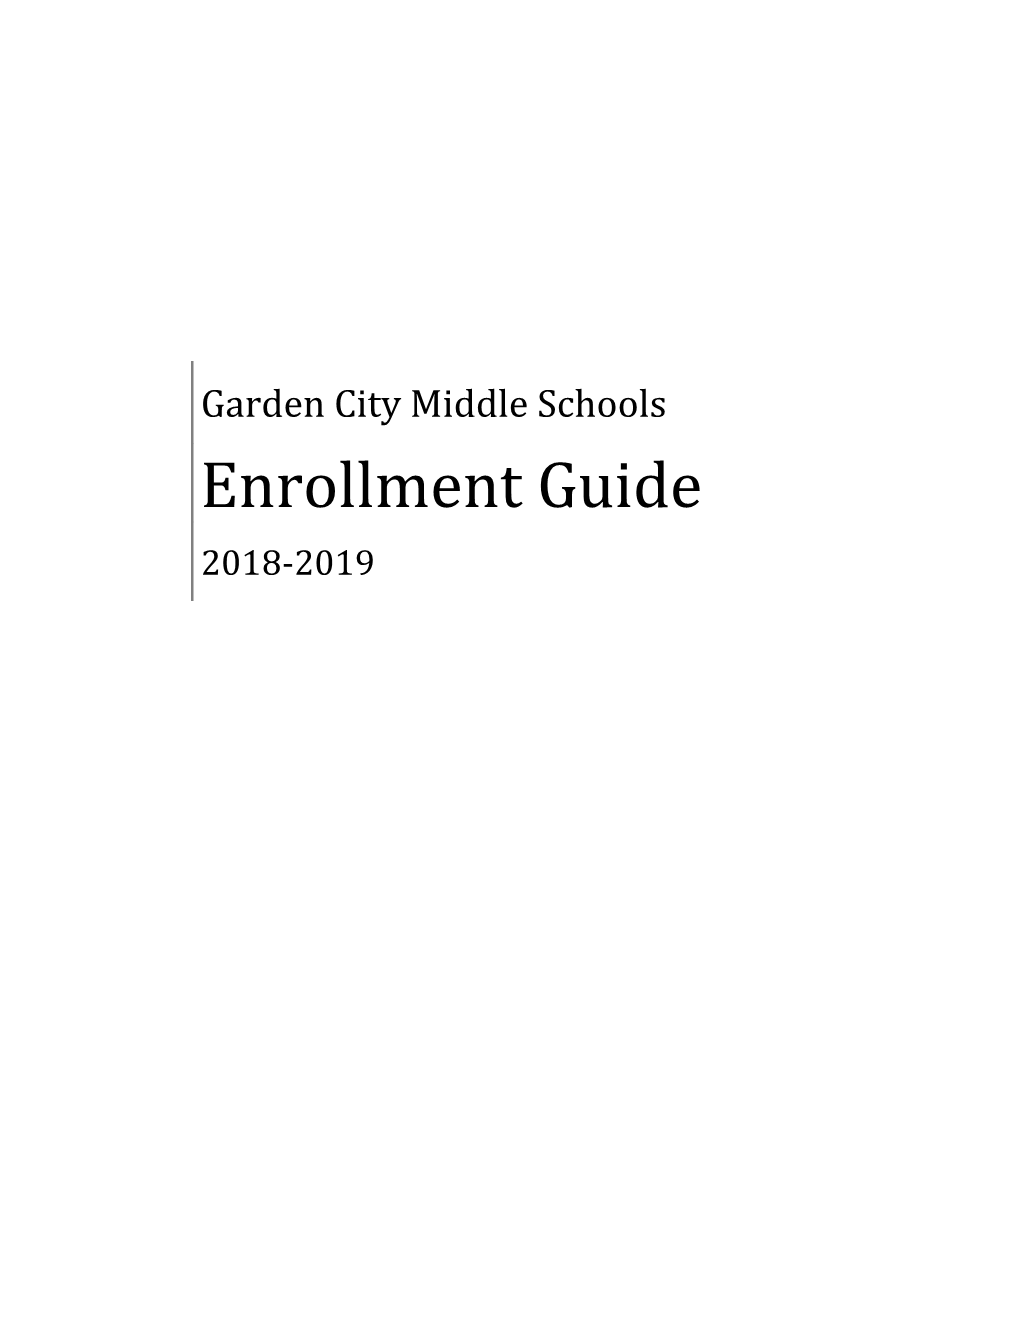 Garden City Middle School Counselors